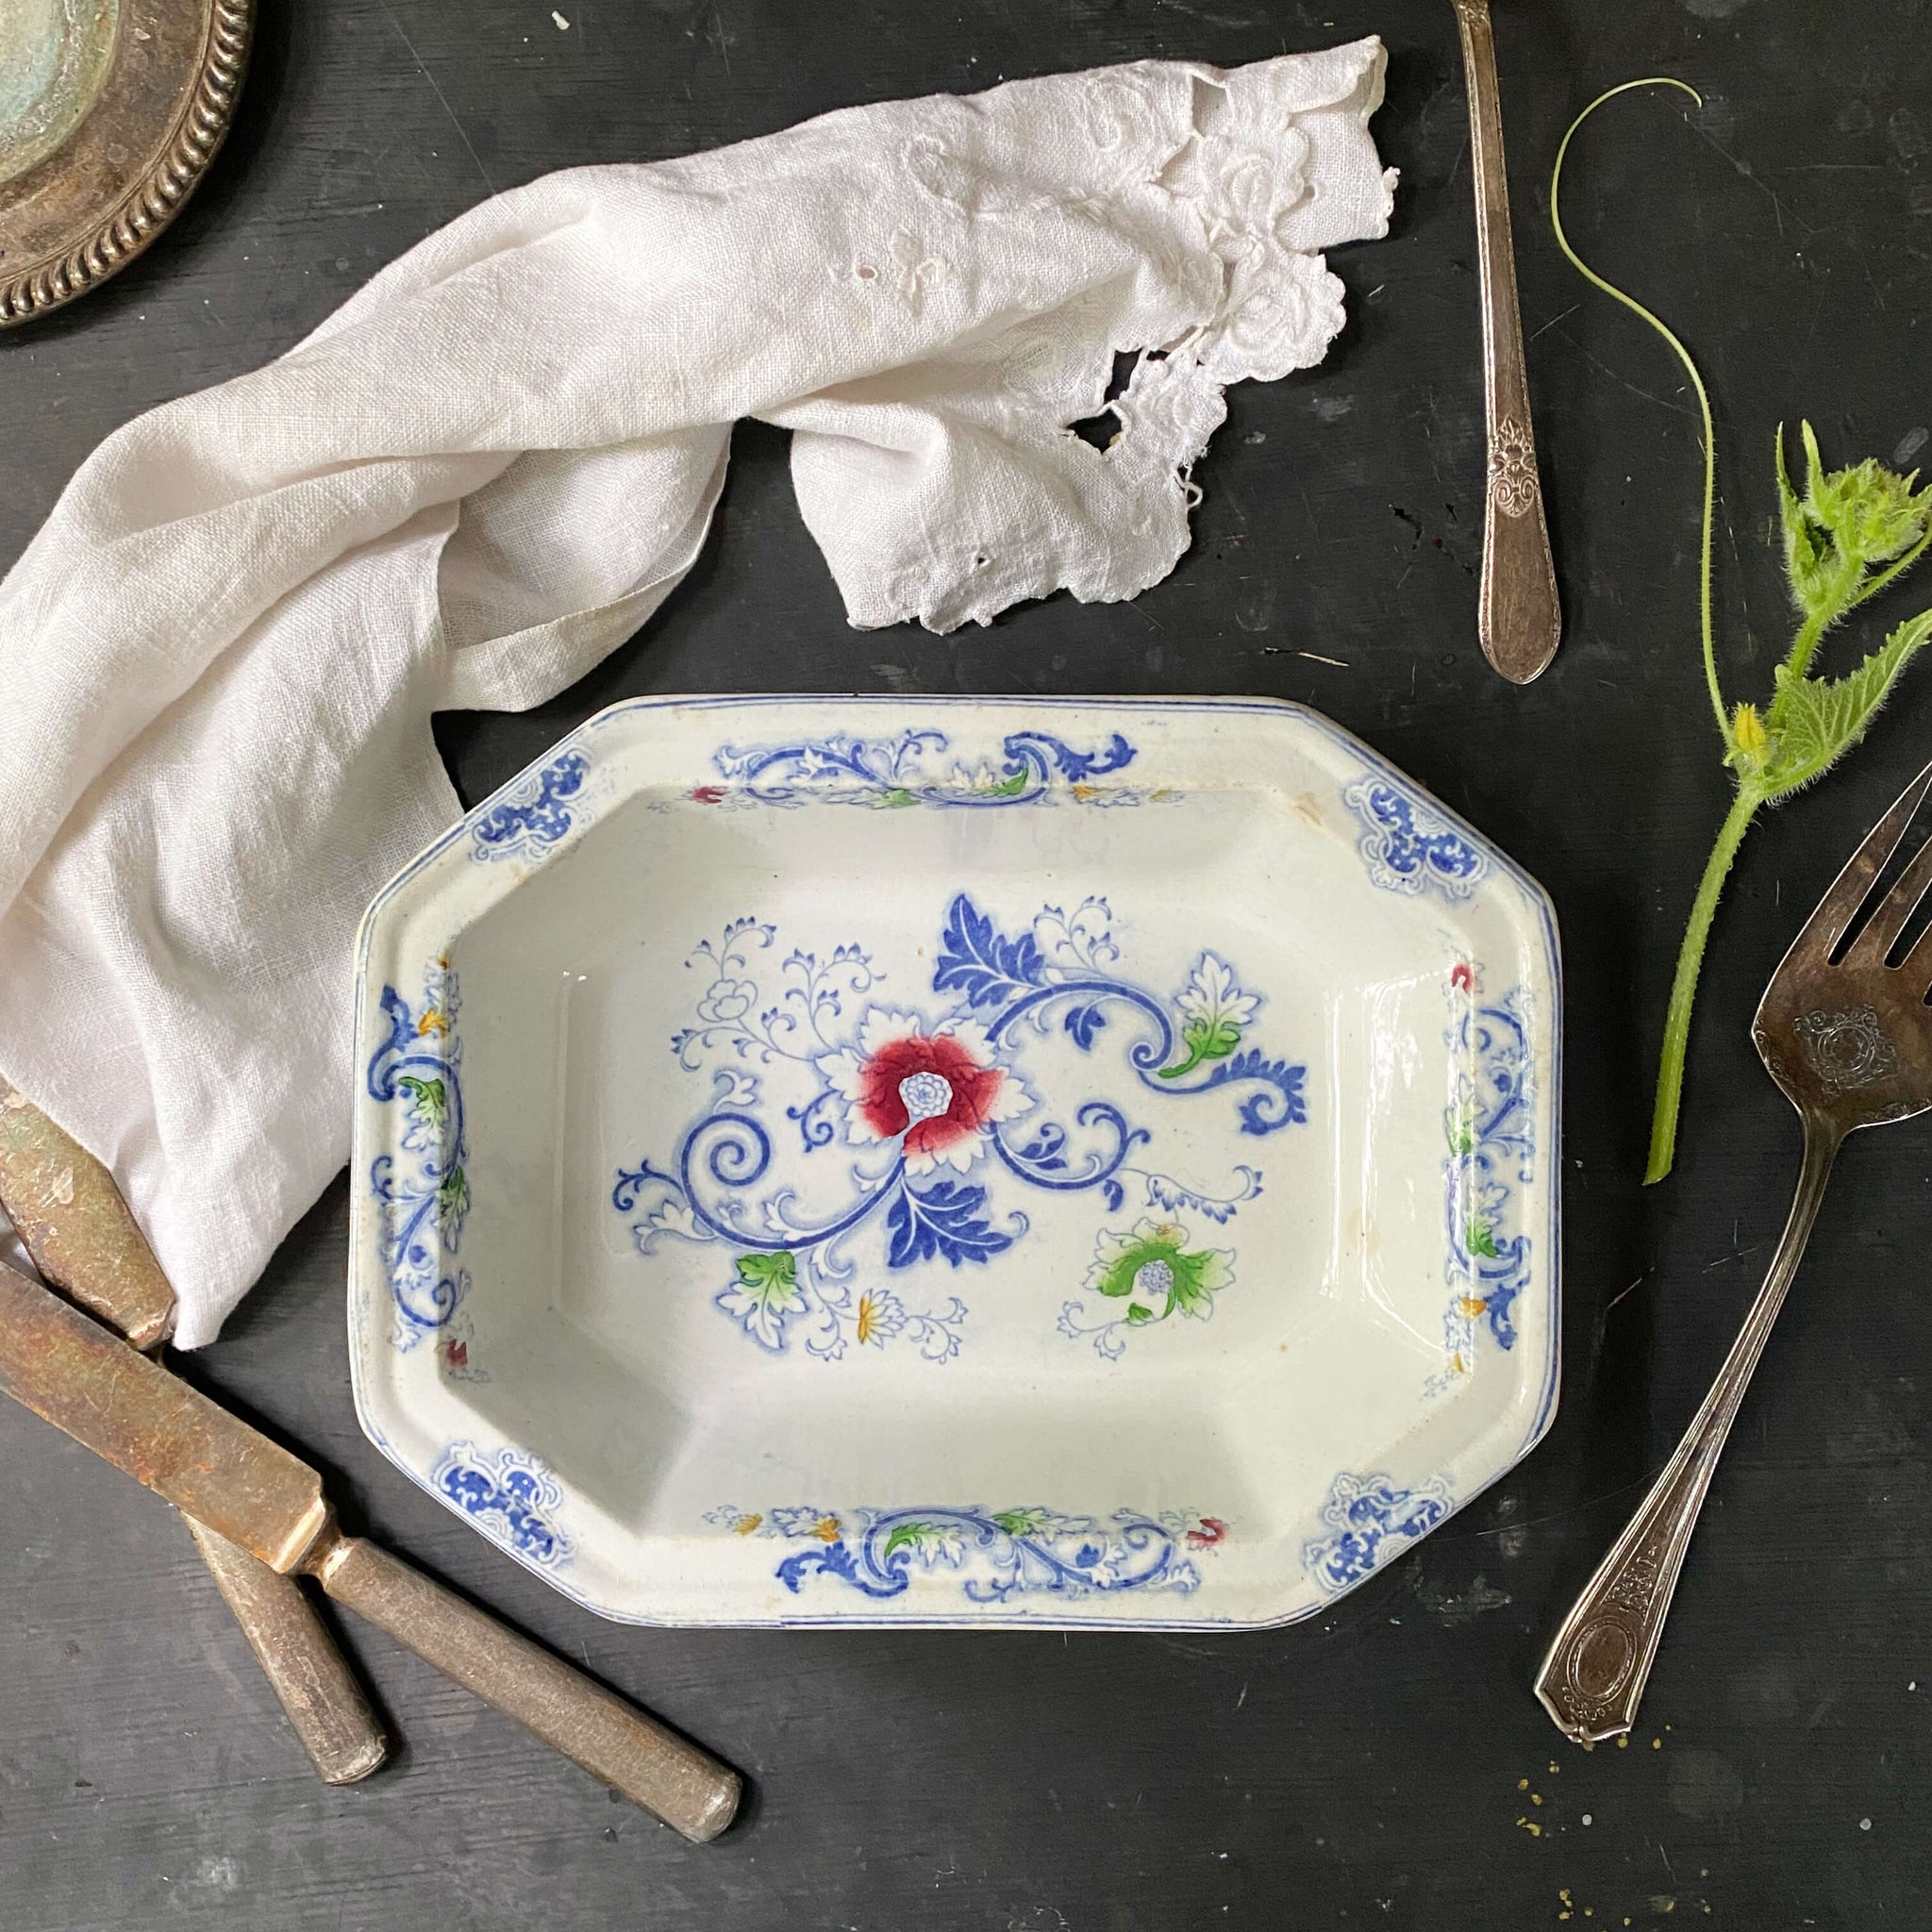 Rare Antique Francis Morley Vegetable Serving Dish - Aurora Pattern circa 1845-1858